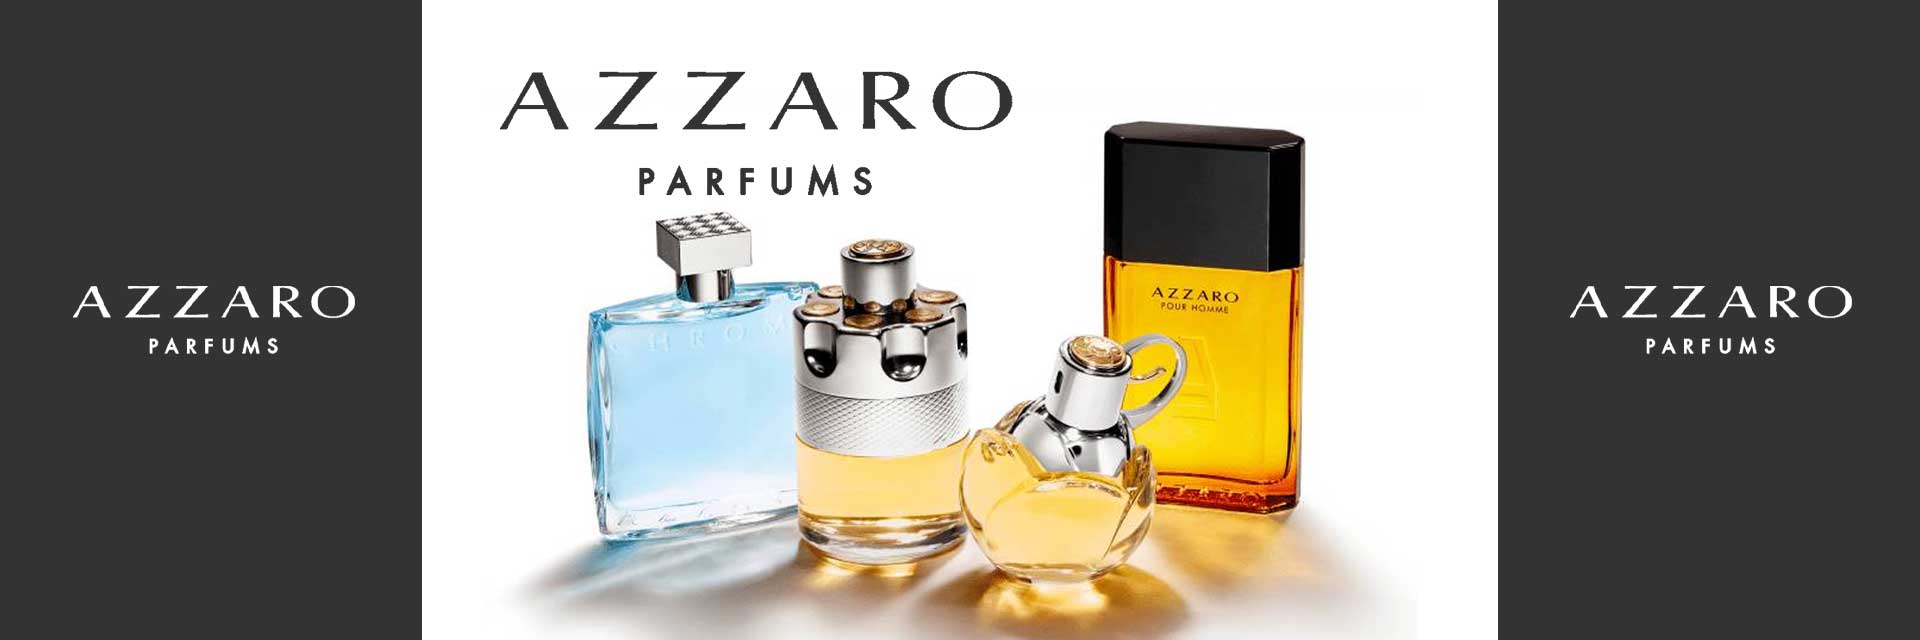 azzaro-parfums